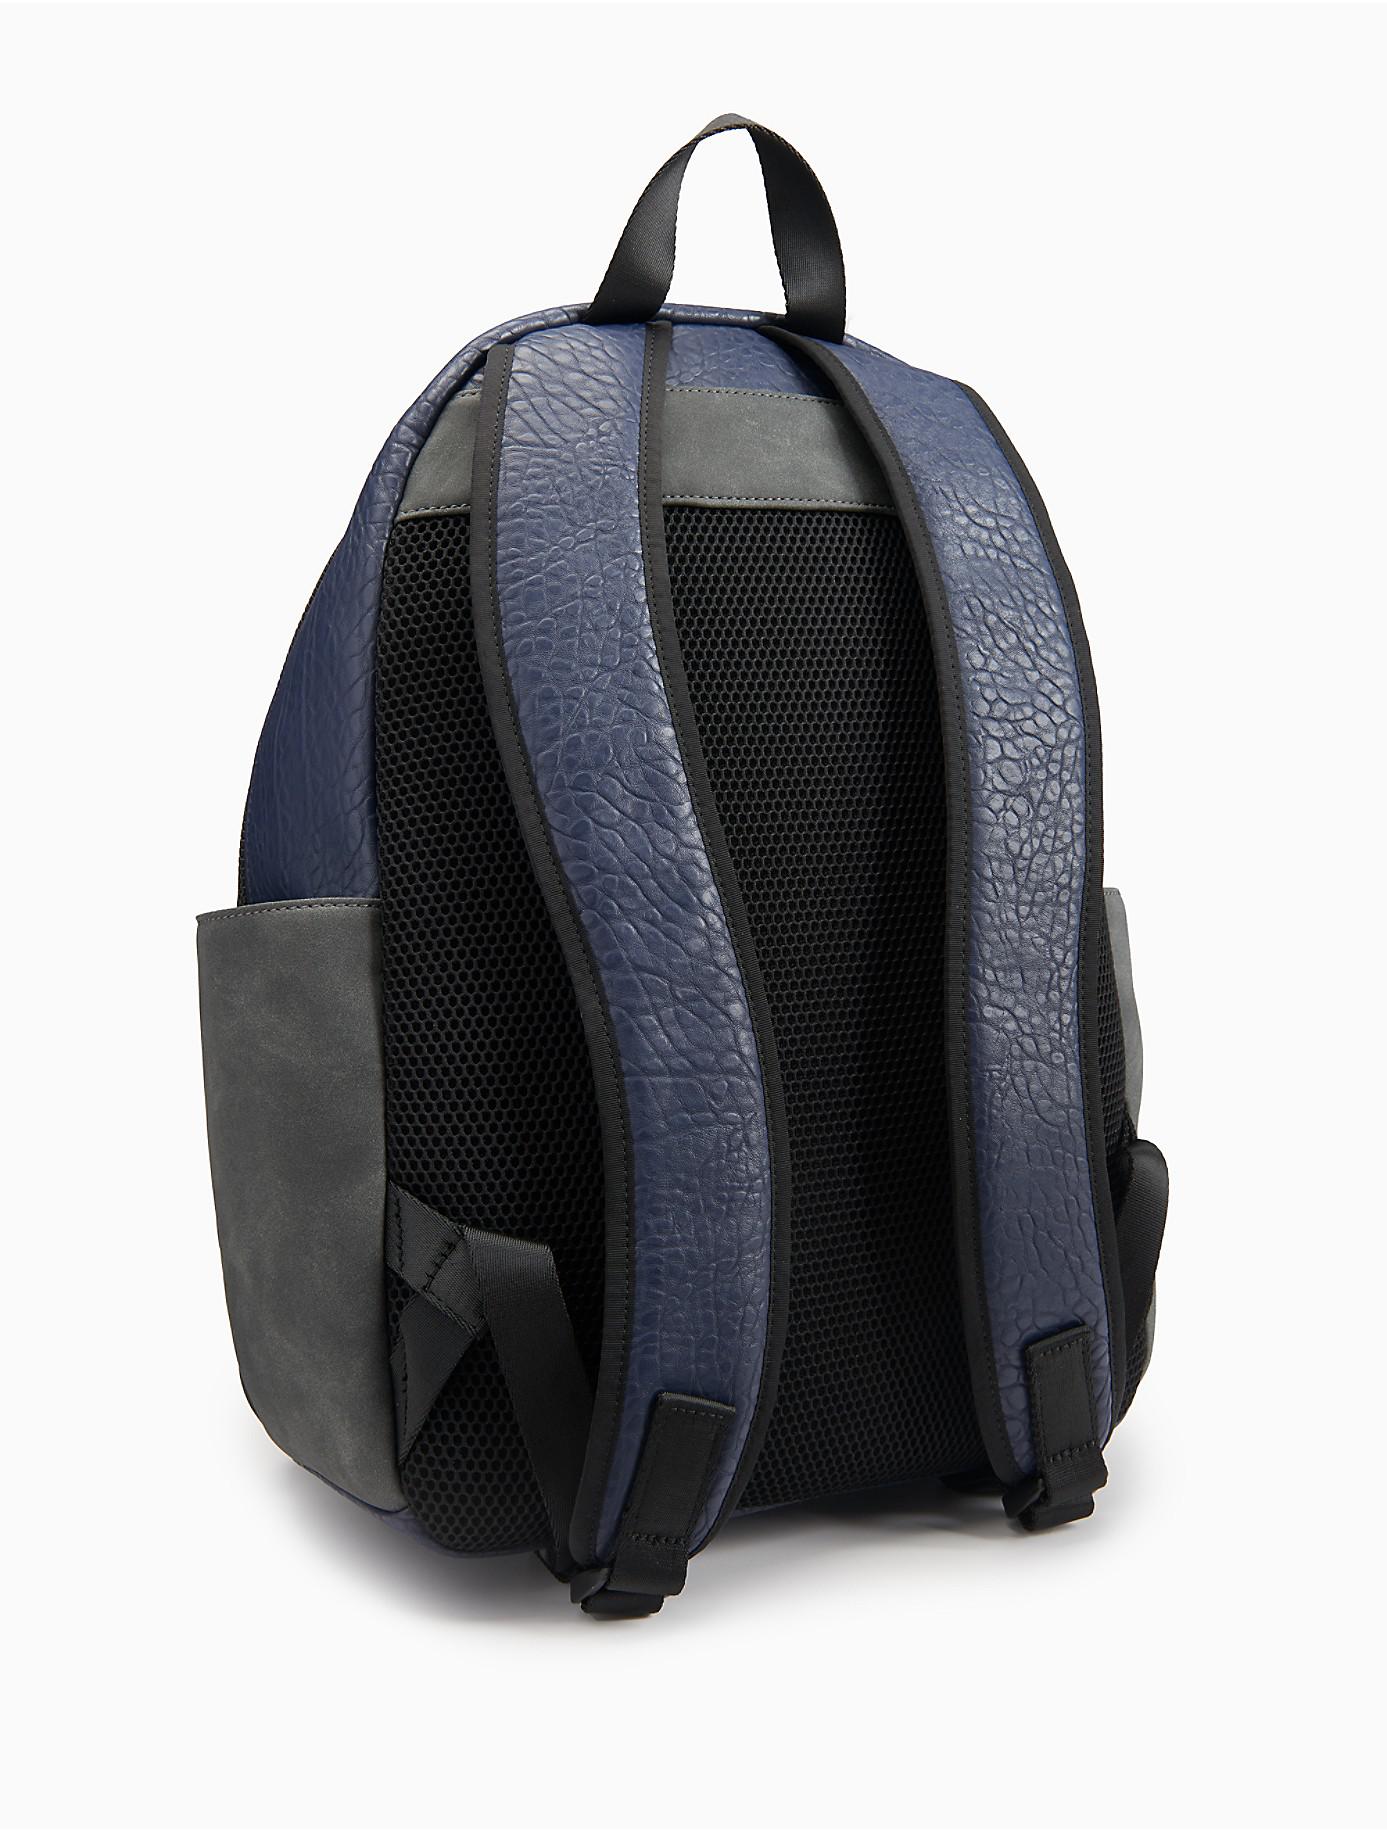 Calvin Klein Pebble Medium Campus Backpack in Blue for Men | Lyst